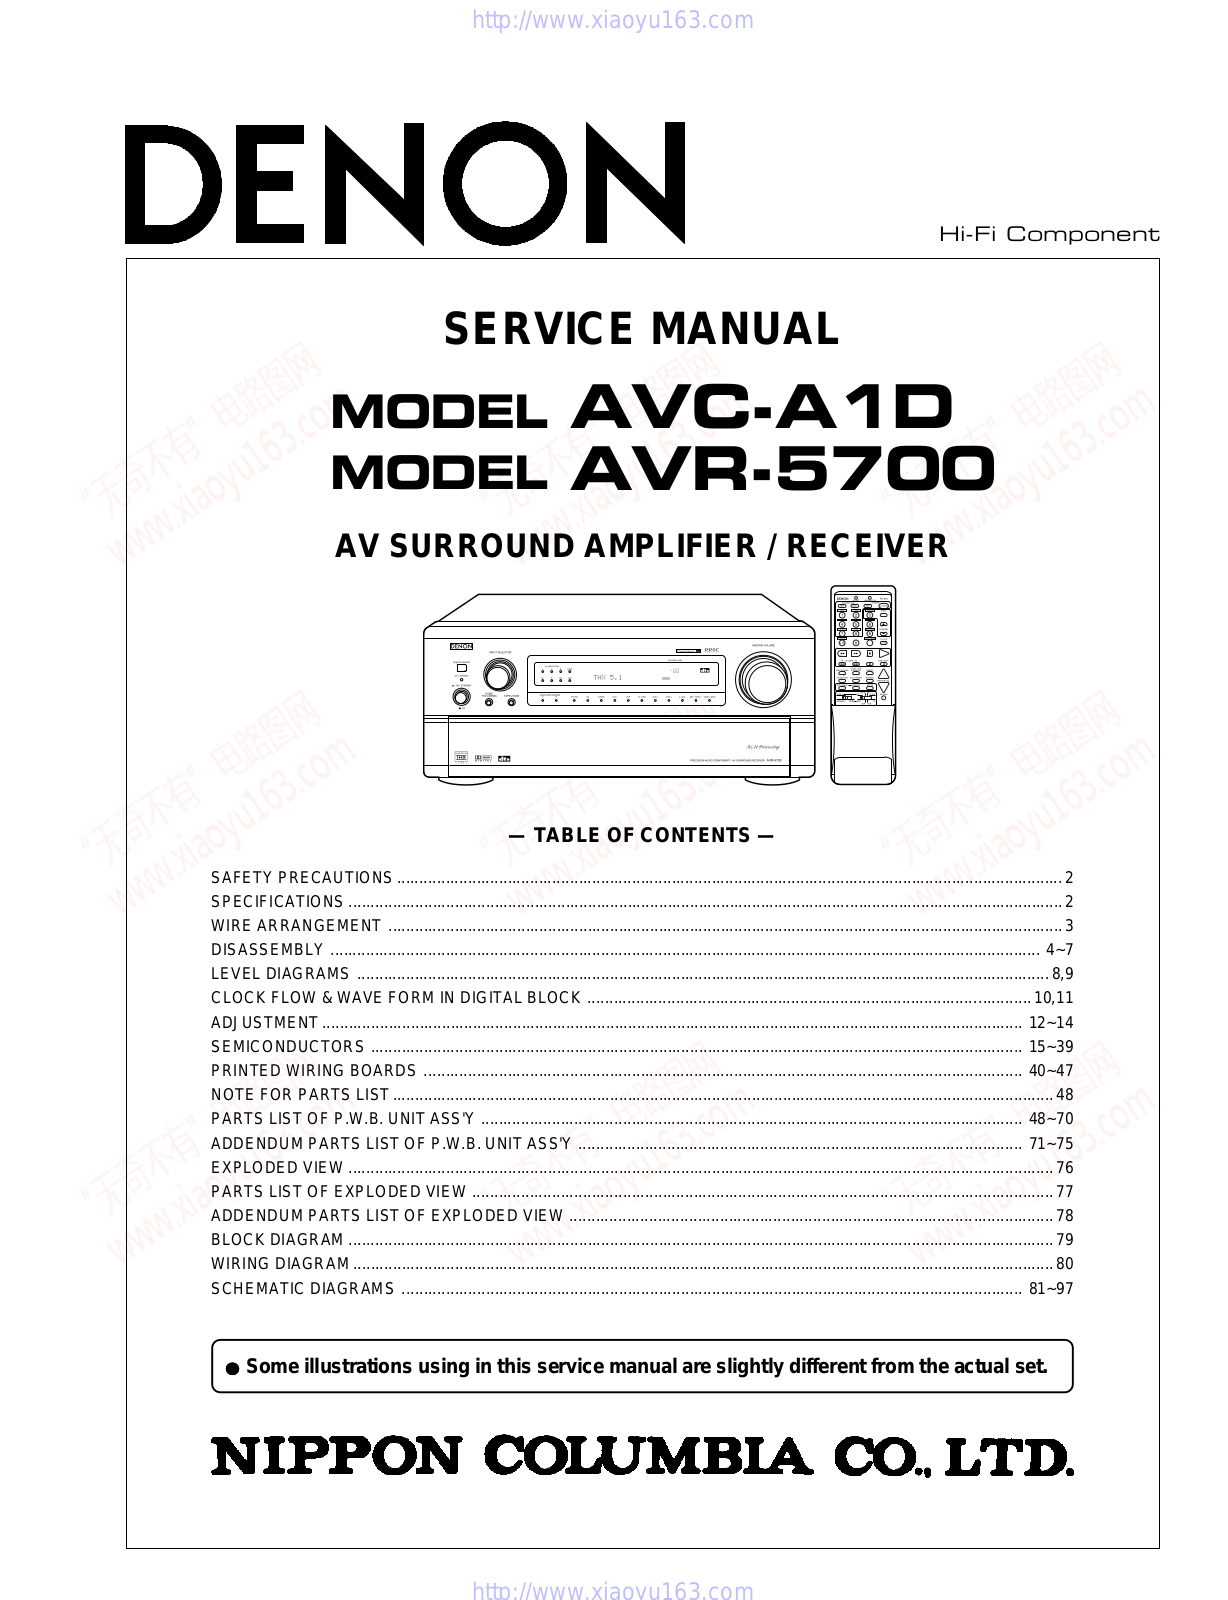 denon AVC-A1D, AVR-5700 Service Manual